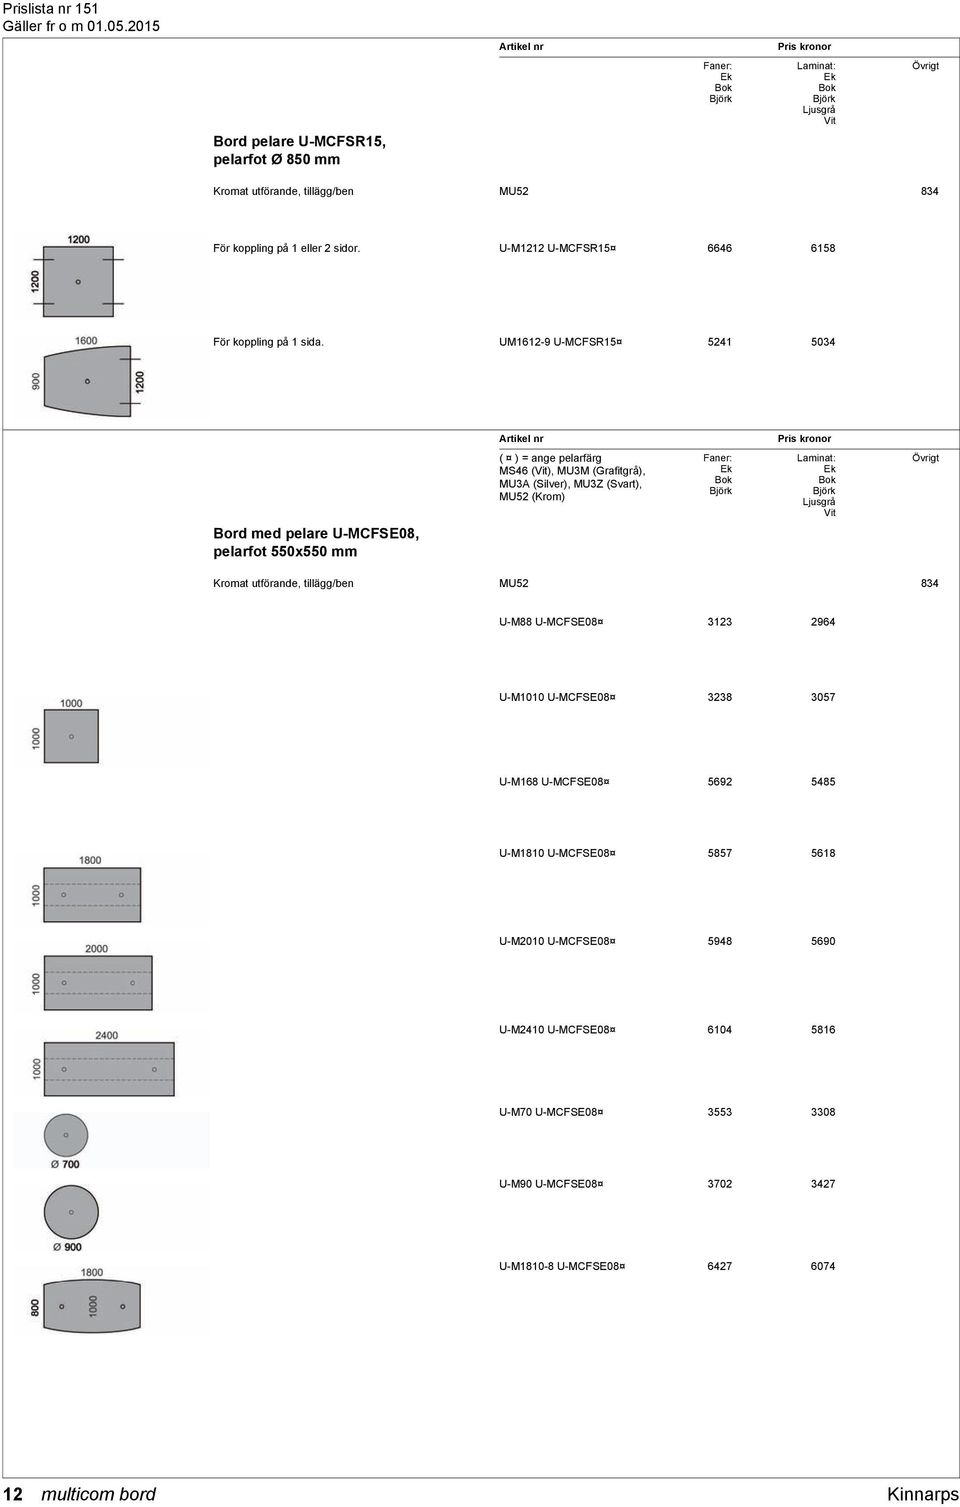 UM1612-9 U-MCFSR15 5241 5034 Bord med pelare U-MCFSE08, pelarfot 550x550 mm ( ) = ange pelarfärg MS46 (Vit), MU3M (Grafitgrå), MU3A (Silver), MU3Z (Svart), MU52 (Krom) : Ek